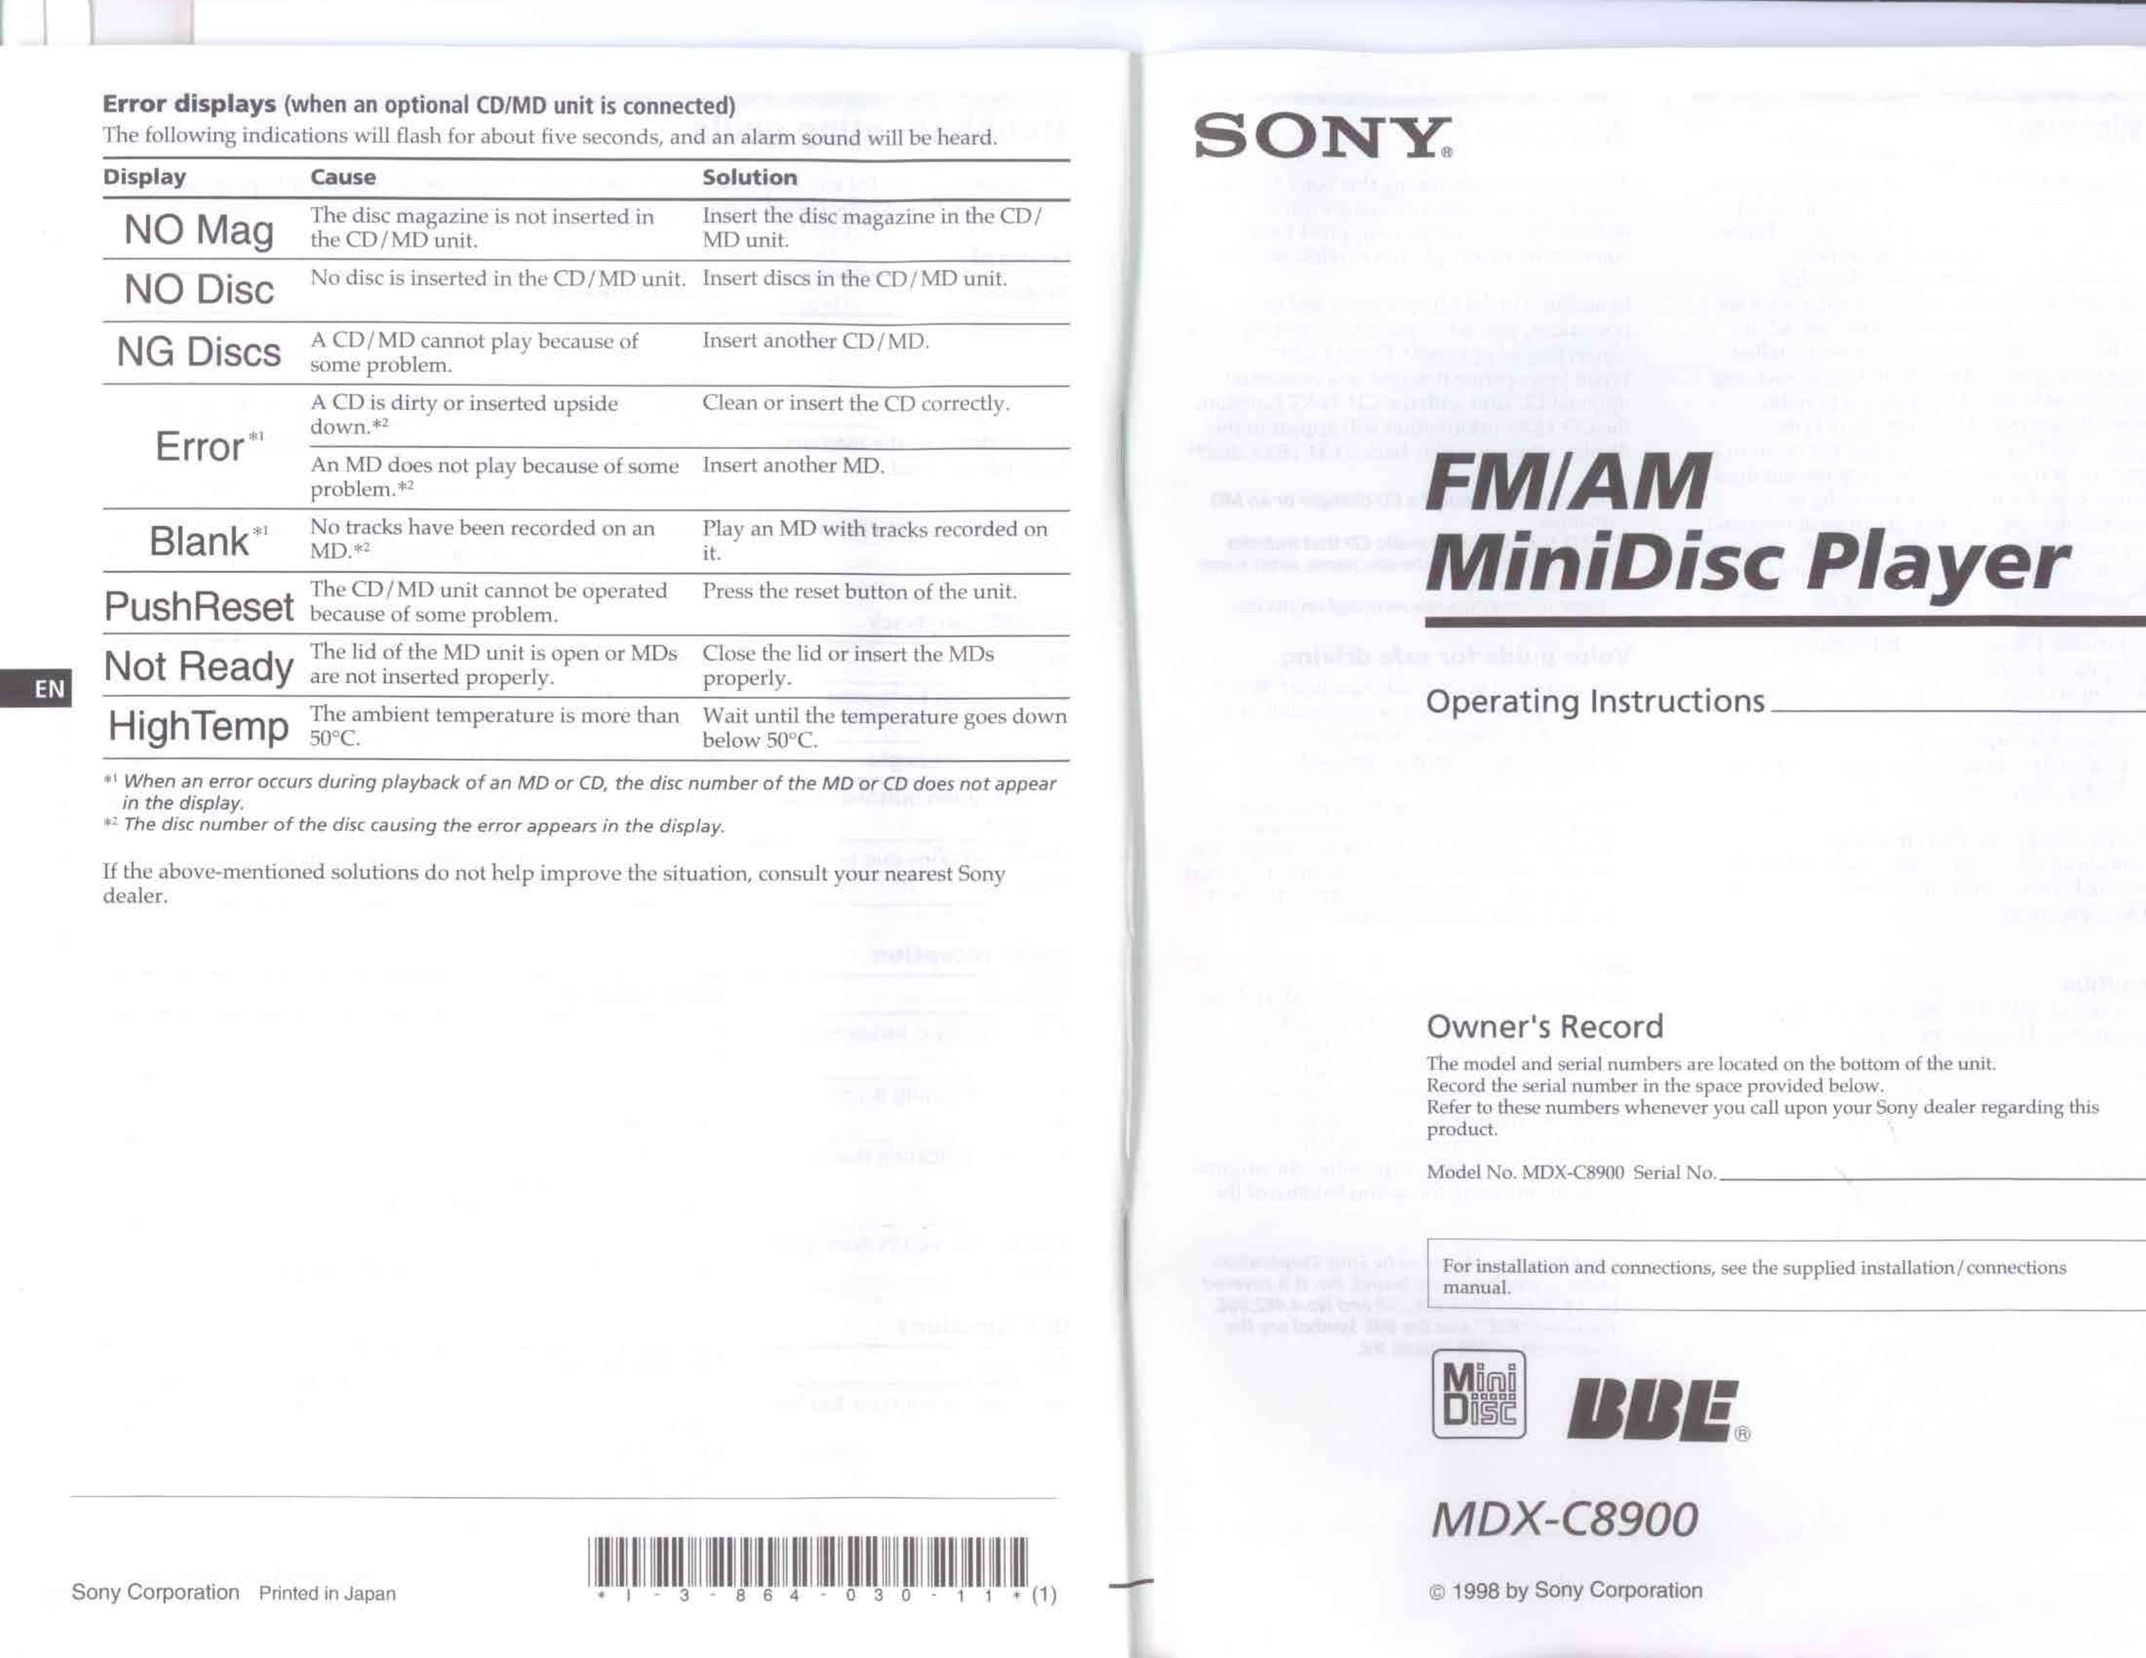 Sony MDX-C8900 MiniDisc Player User Manual